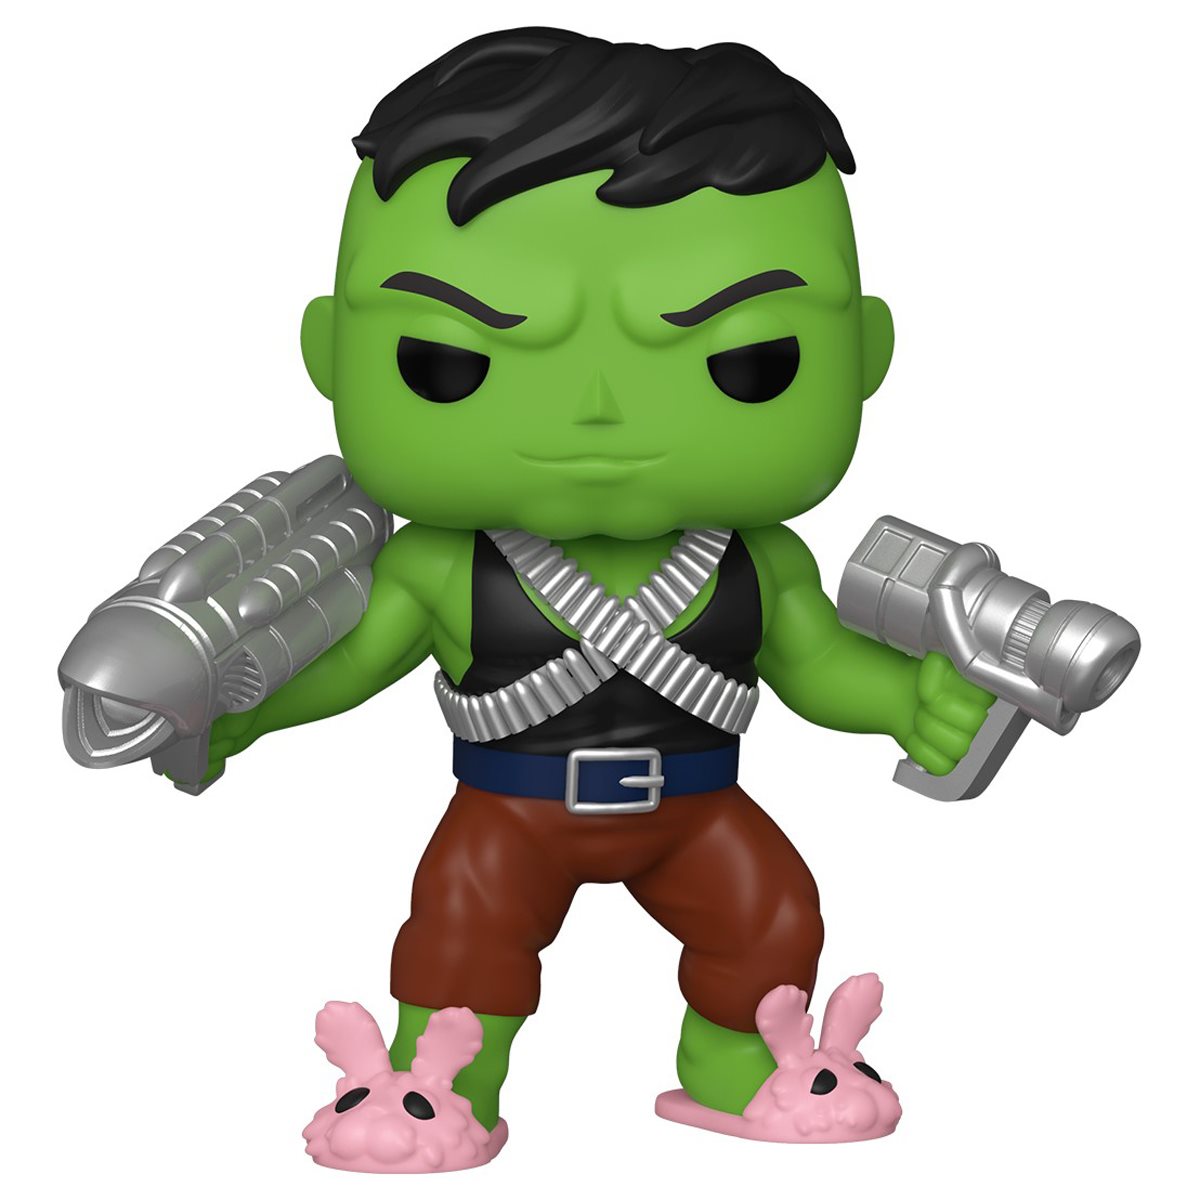 Funko Pop Marvel Profesor Hulk PX Exclusive